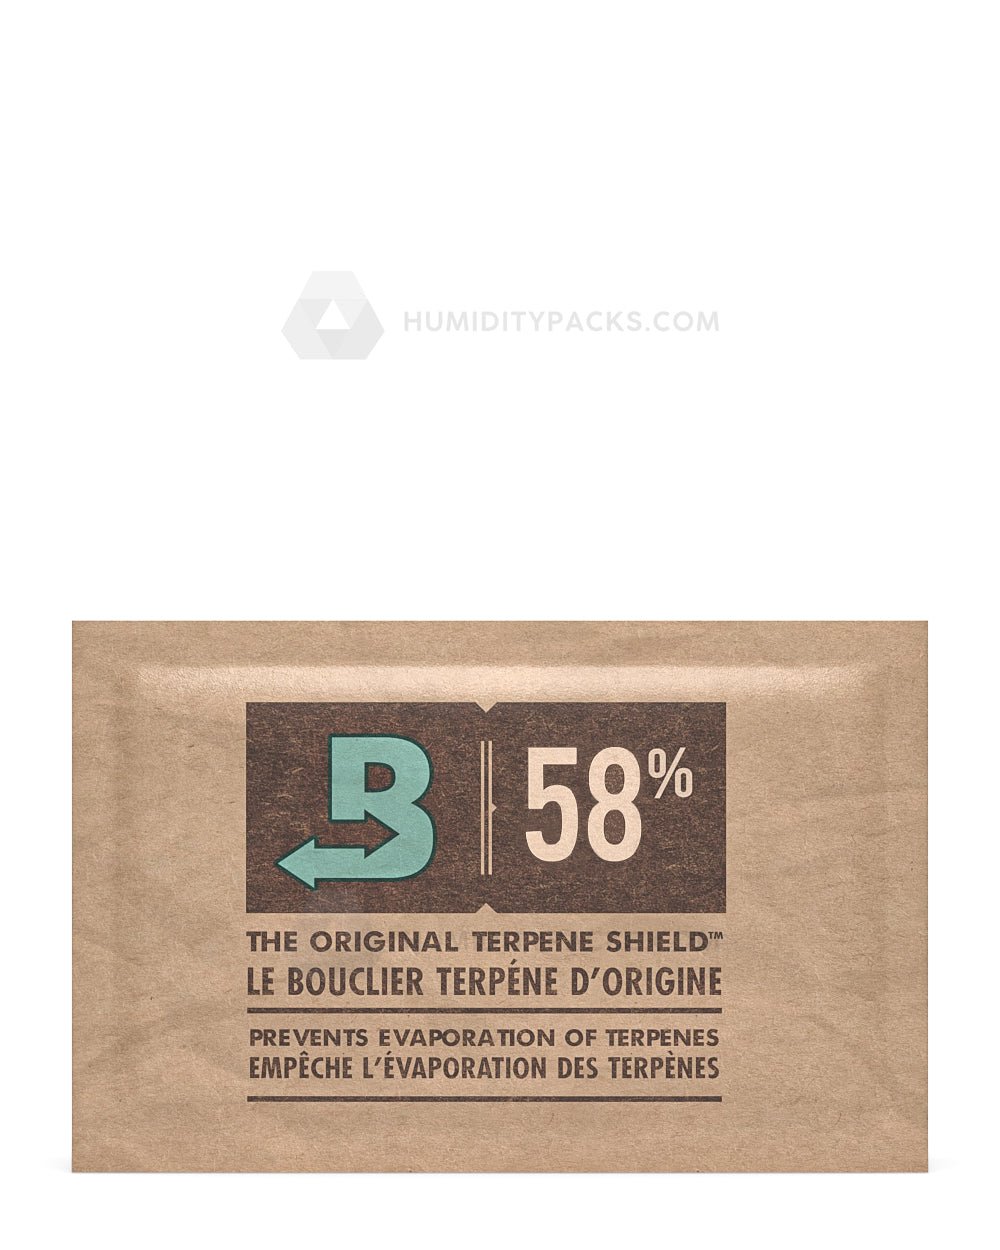 Boveda Humidity Packs 58% (67 Gram) 100-Box Humidity Packs - 2